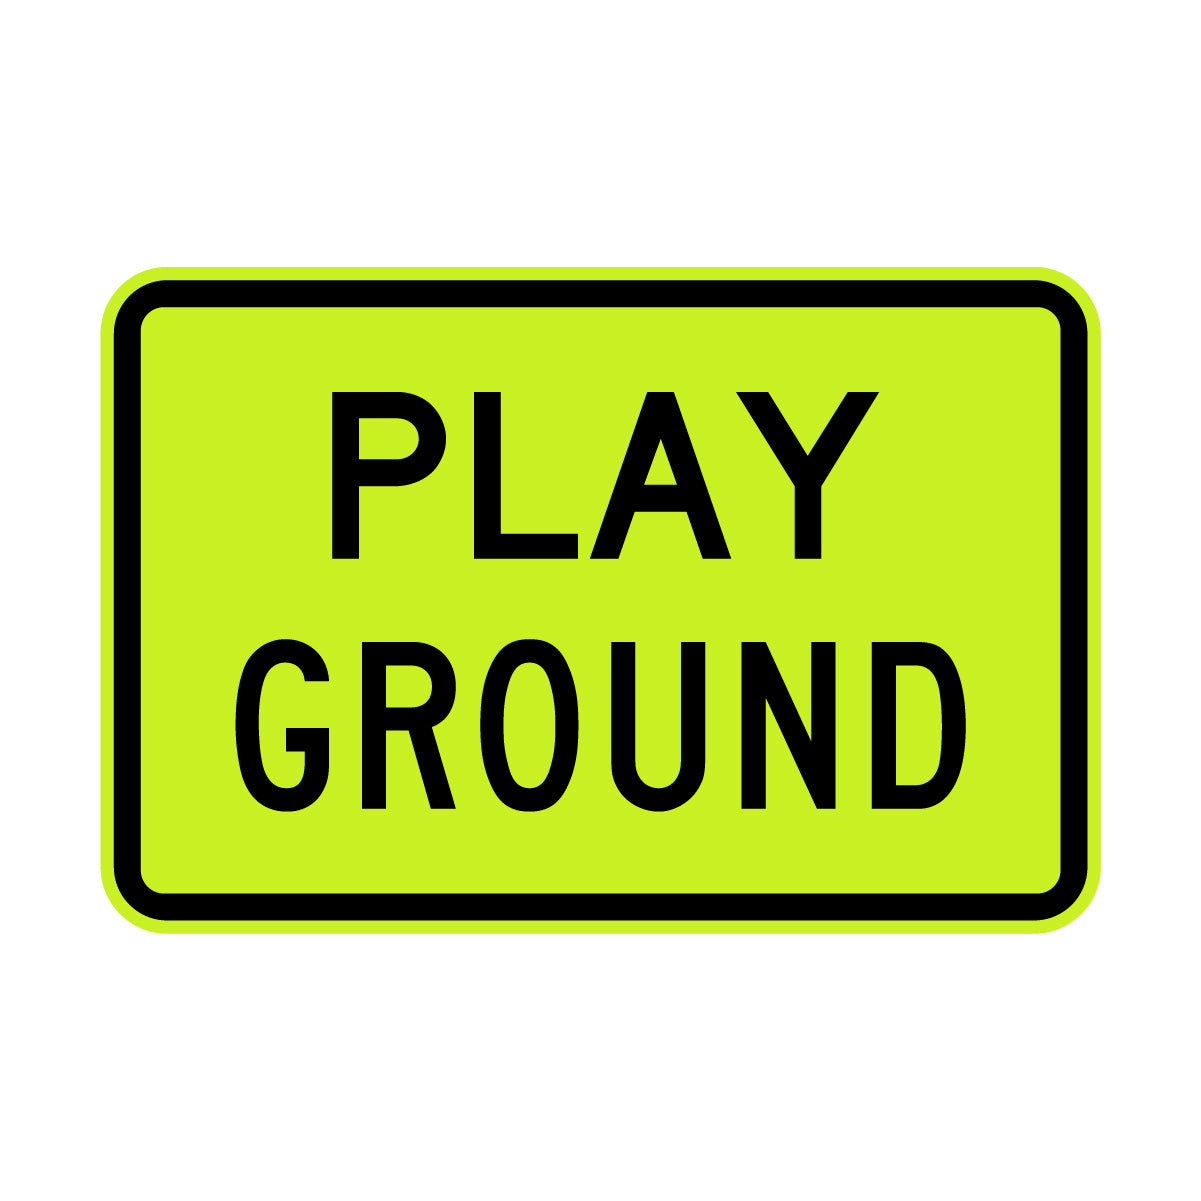 Warning: Play Ground Sign